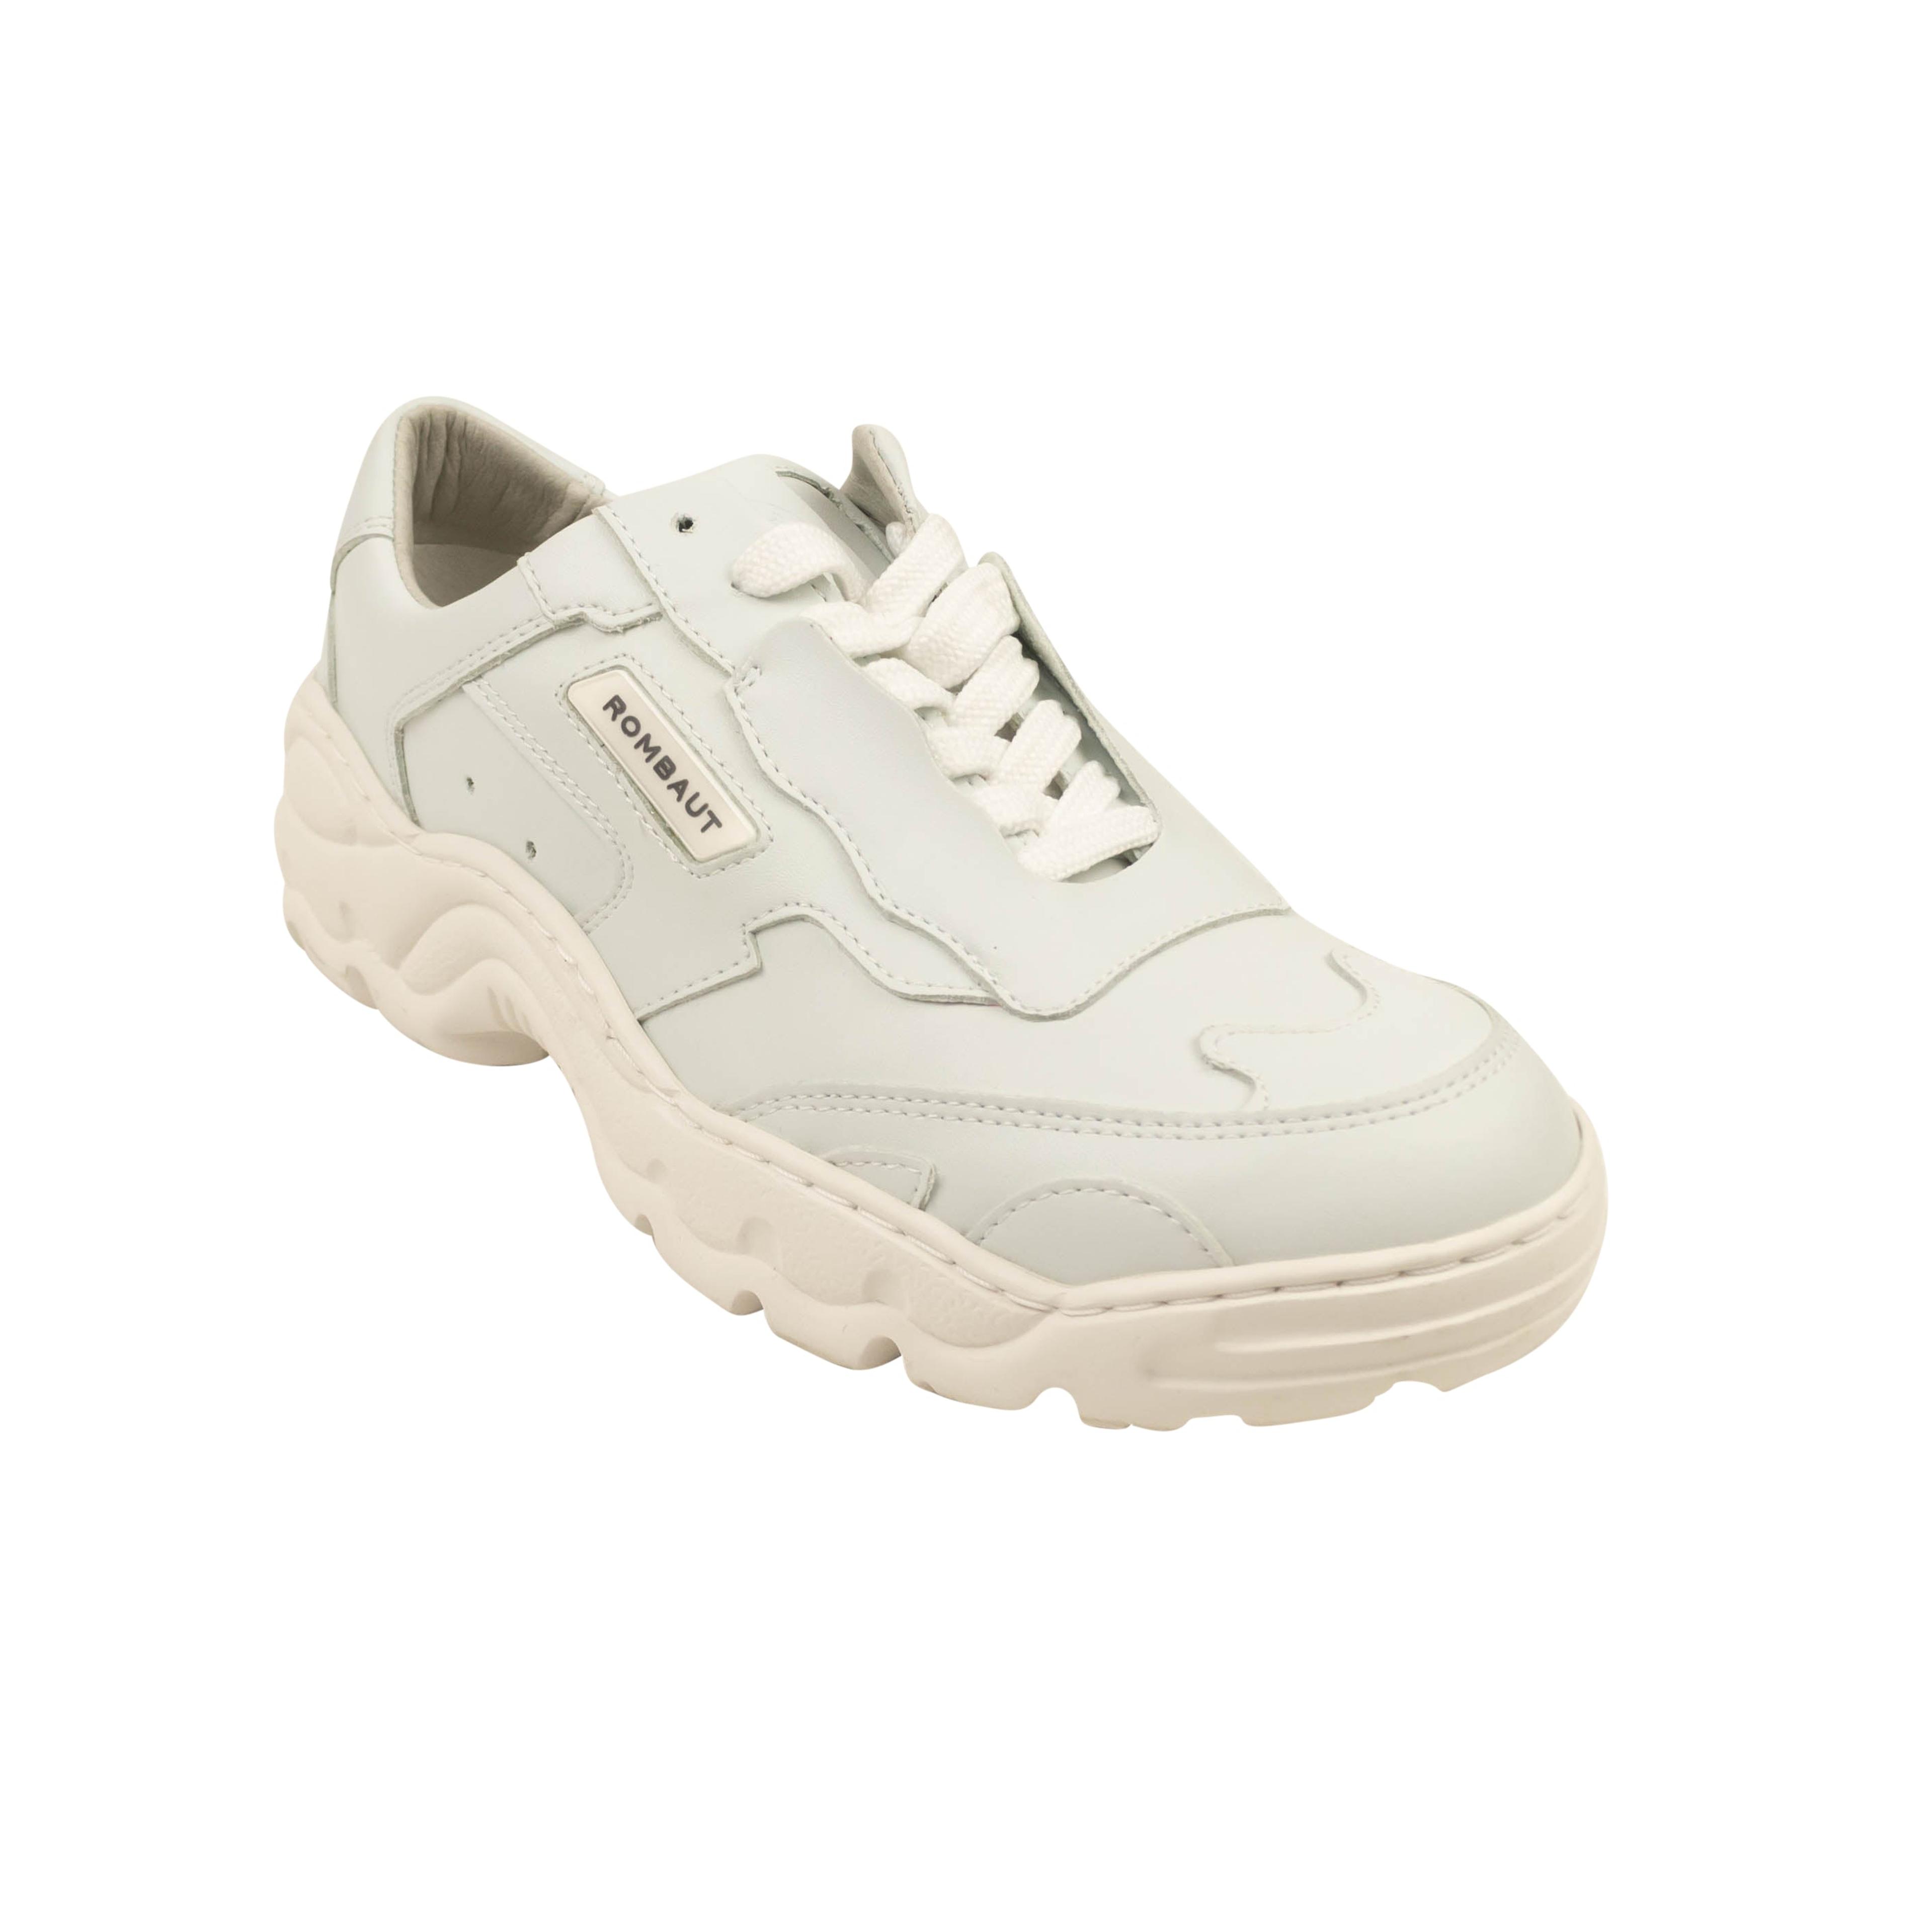 Alternate View 1 of White Leather Boccaccio Low Sneakers